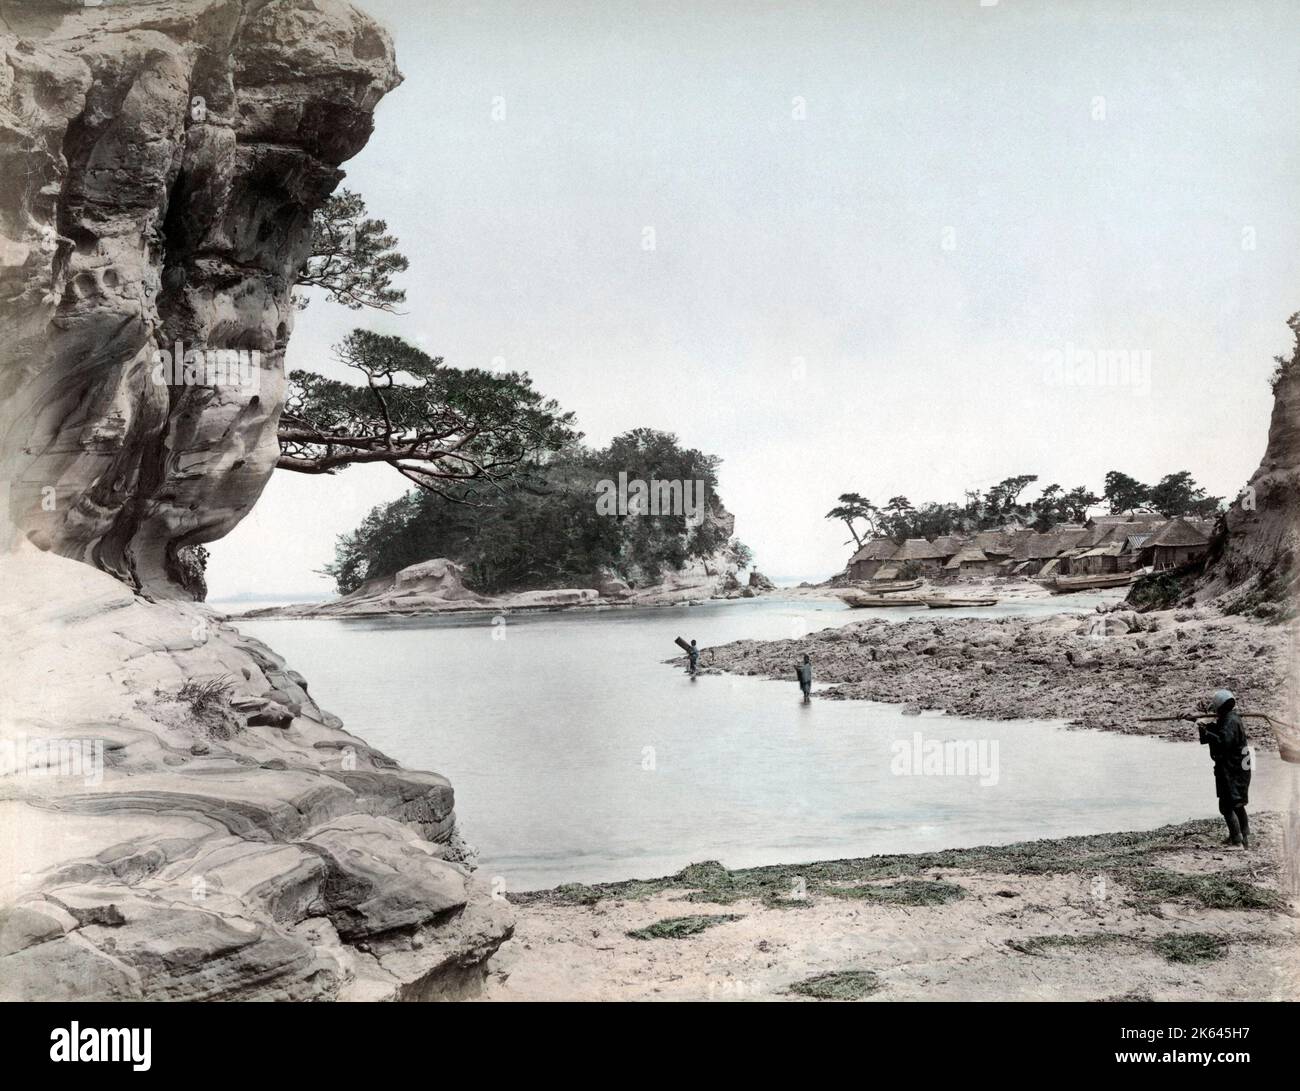 Awaji Island, Seto Inland Sea, Japan, c.1880's Vintage Foto aus dem späten 19.. Jahrhundert Stockfoto